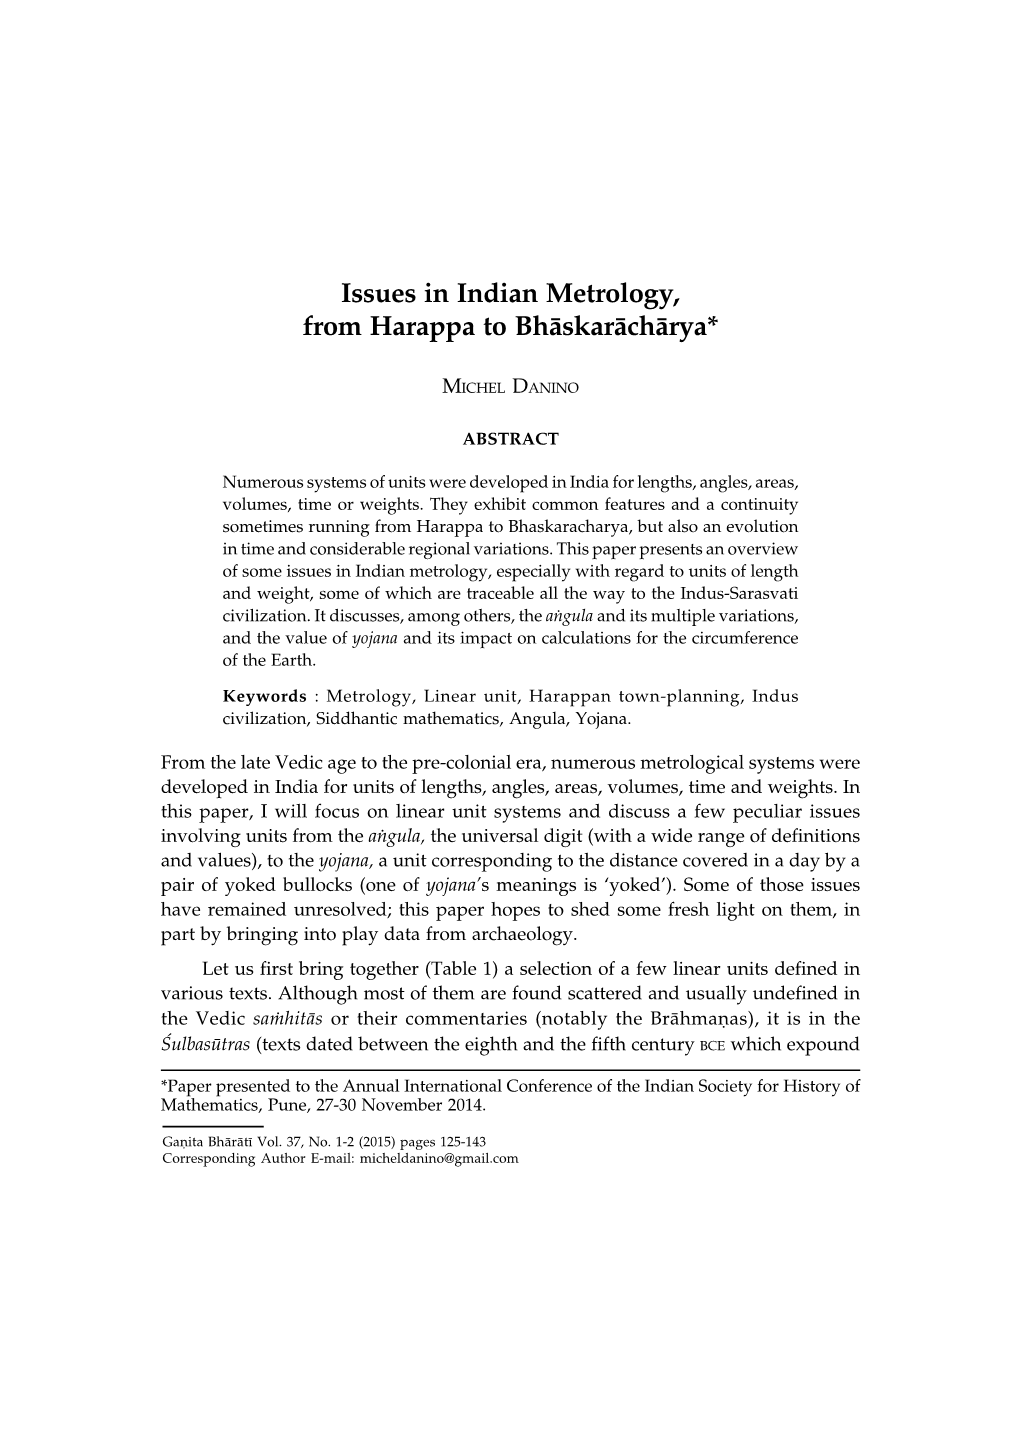 Issues in Indian Metrology, from Harappa to Bhāskarāchārya